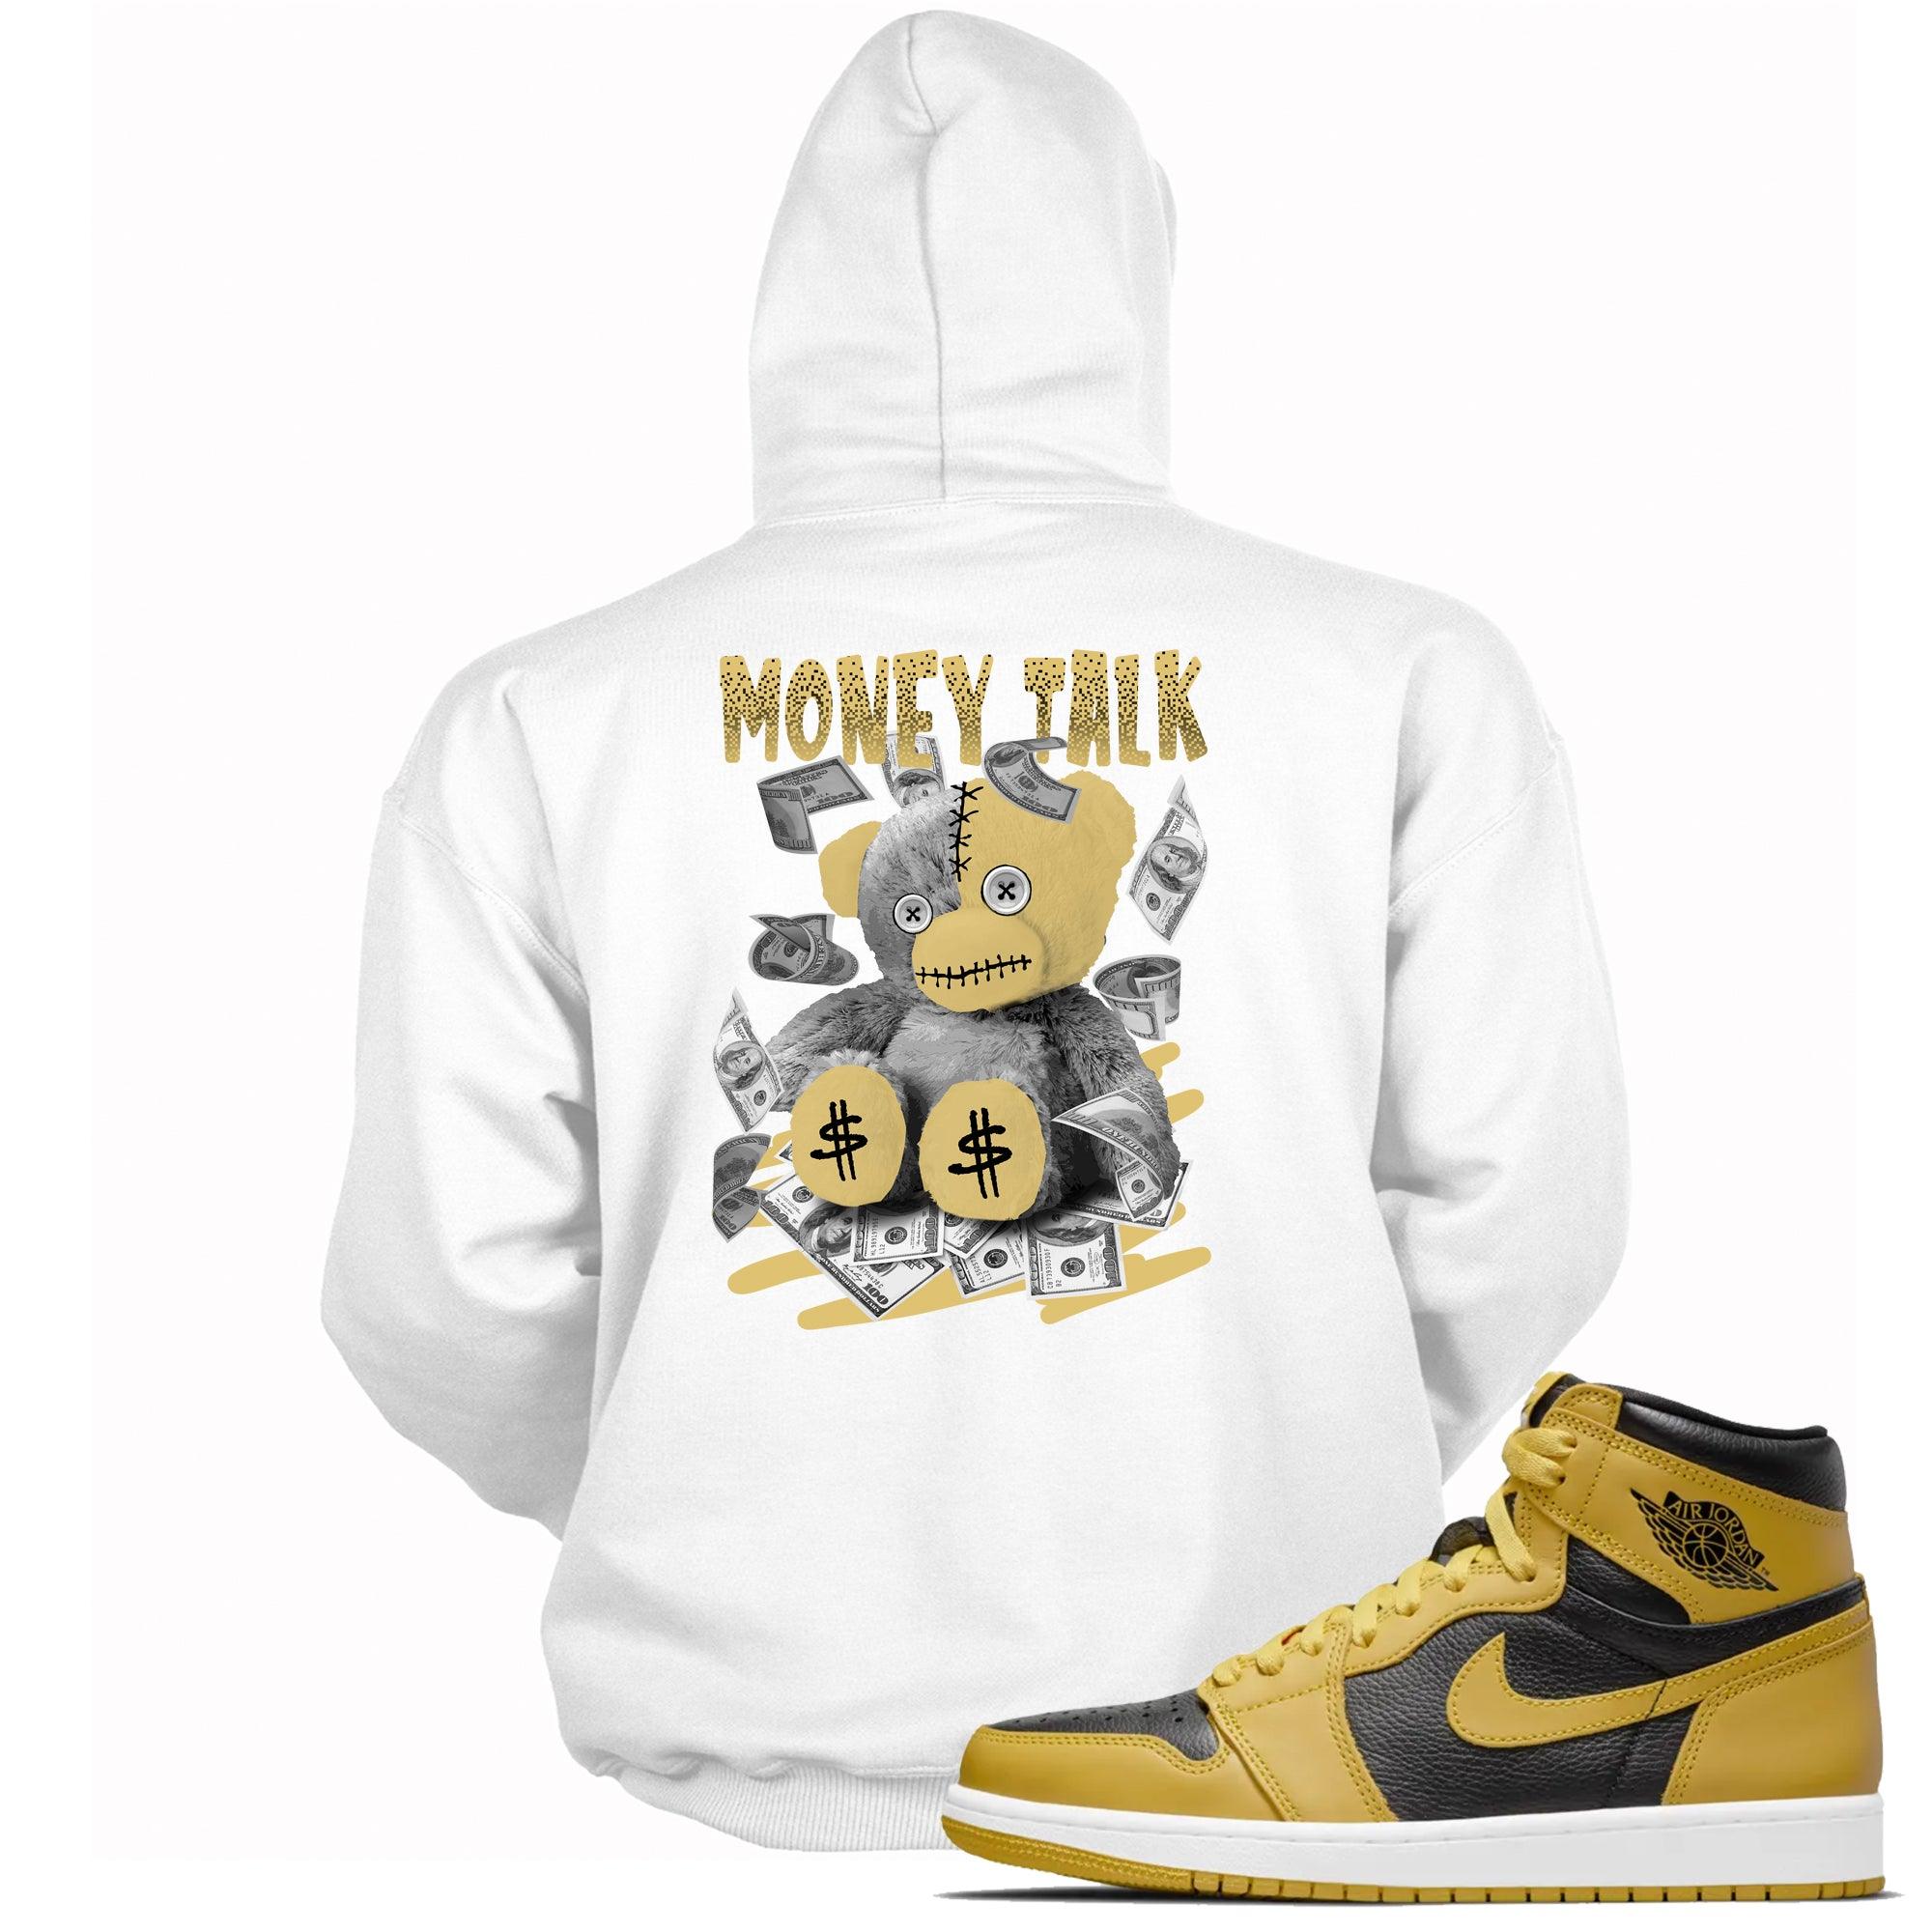 Money Talk Sneaker Sweatshirt AJ 1 Retro High Pollen photo